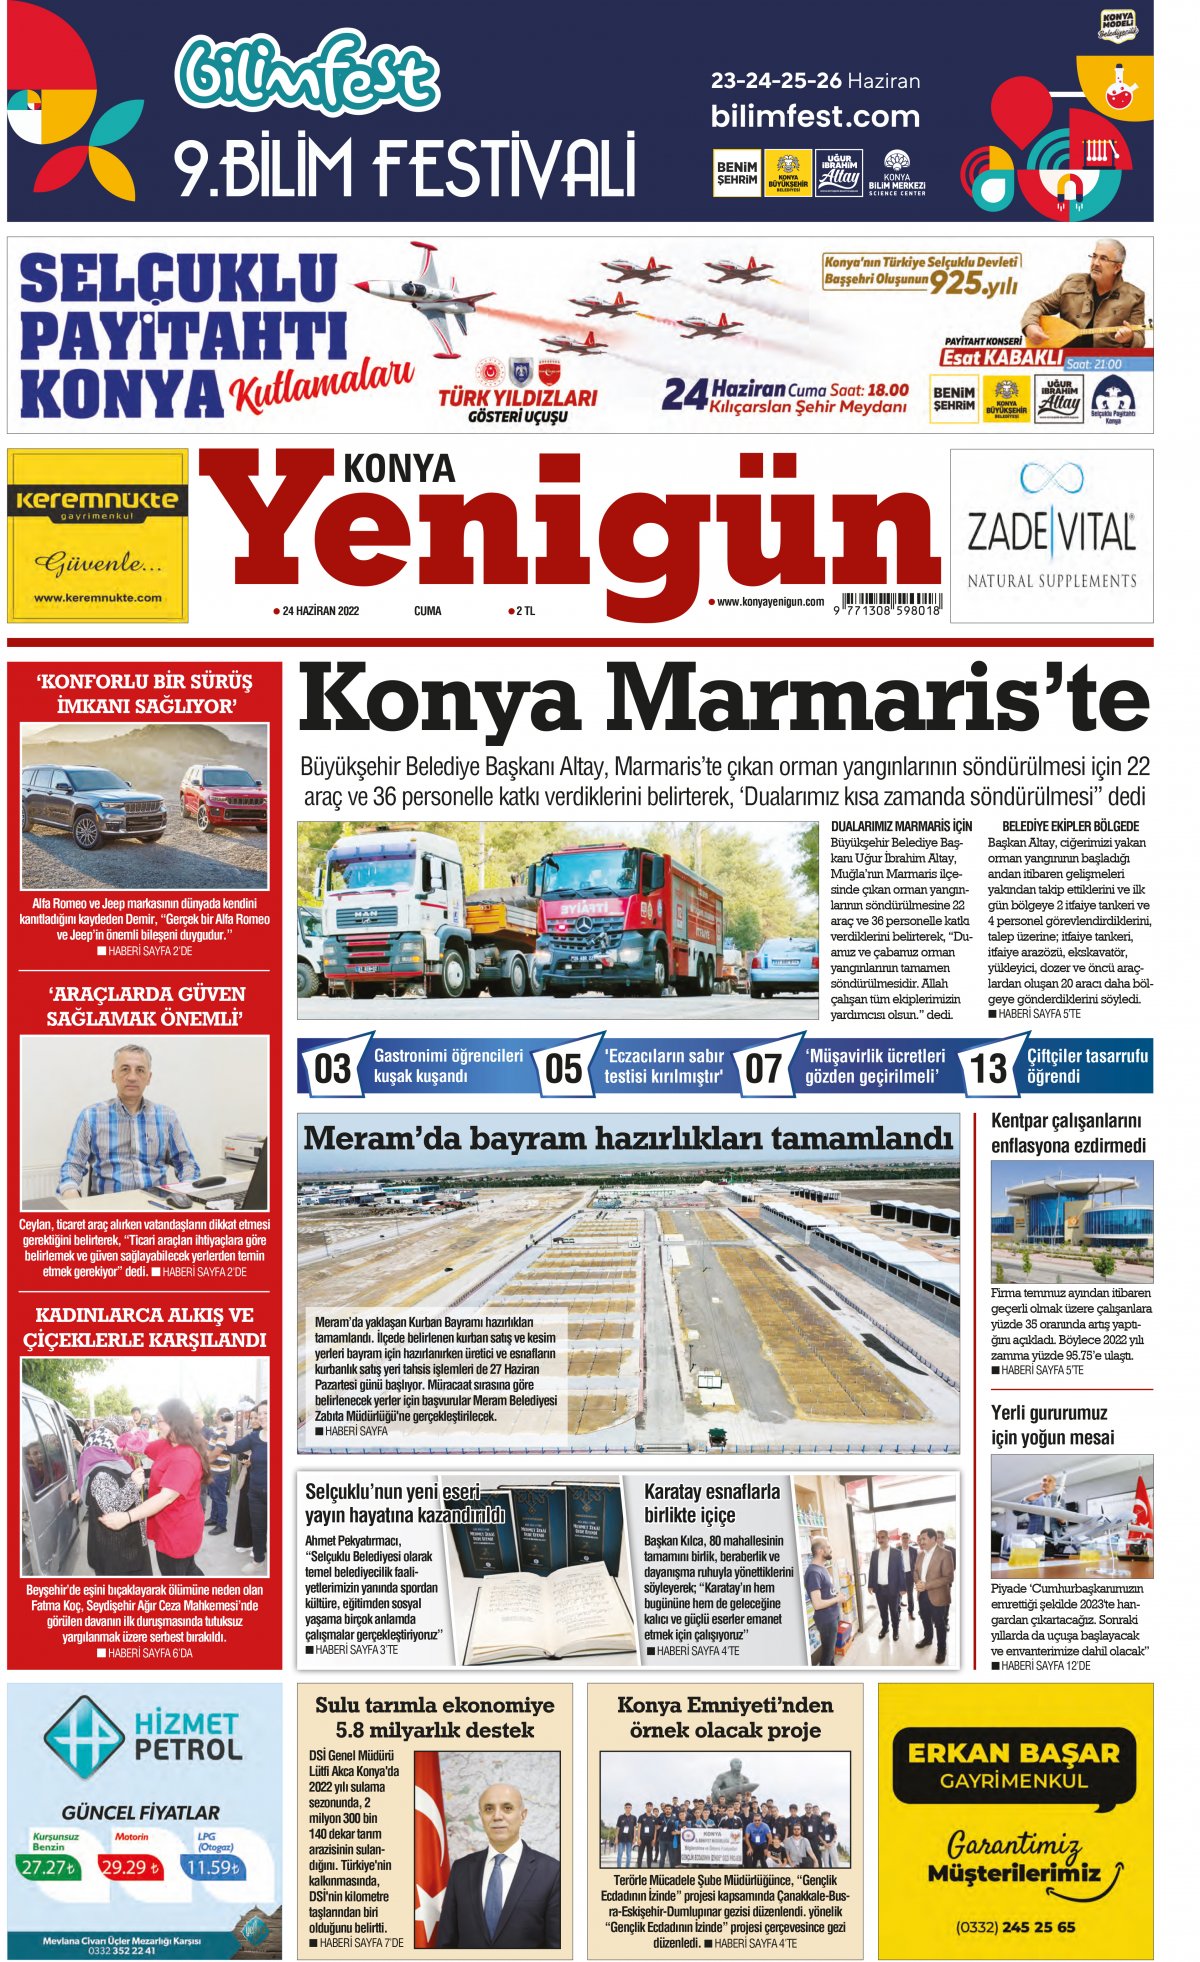 Konya Yenigün Gazetesi - 24.06.2022 Manşeti